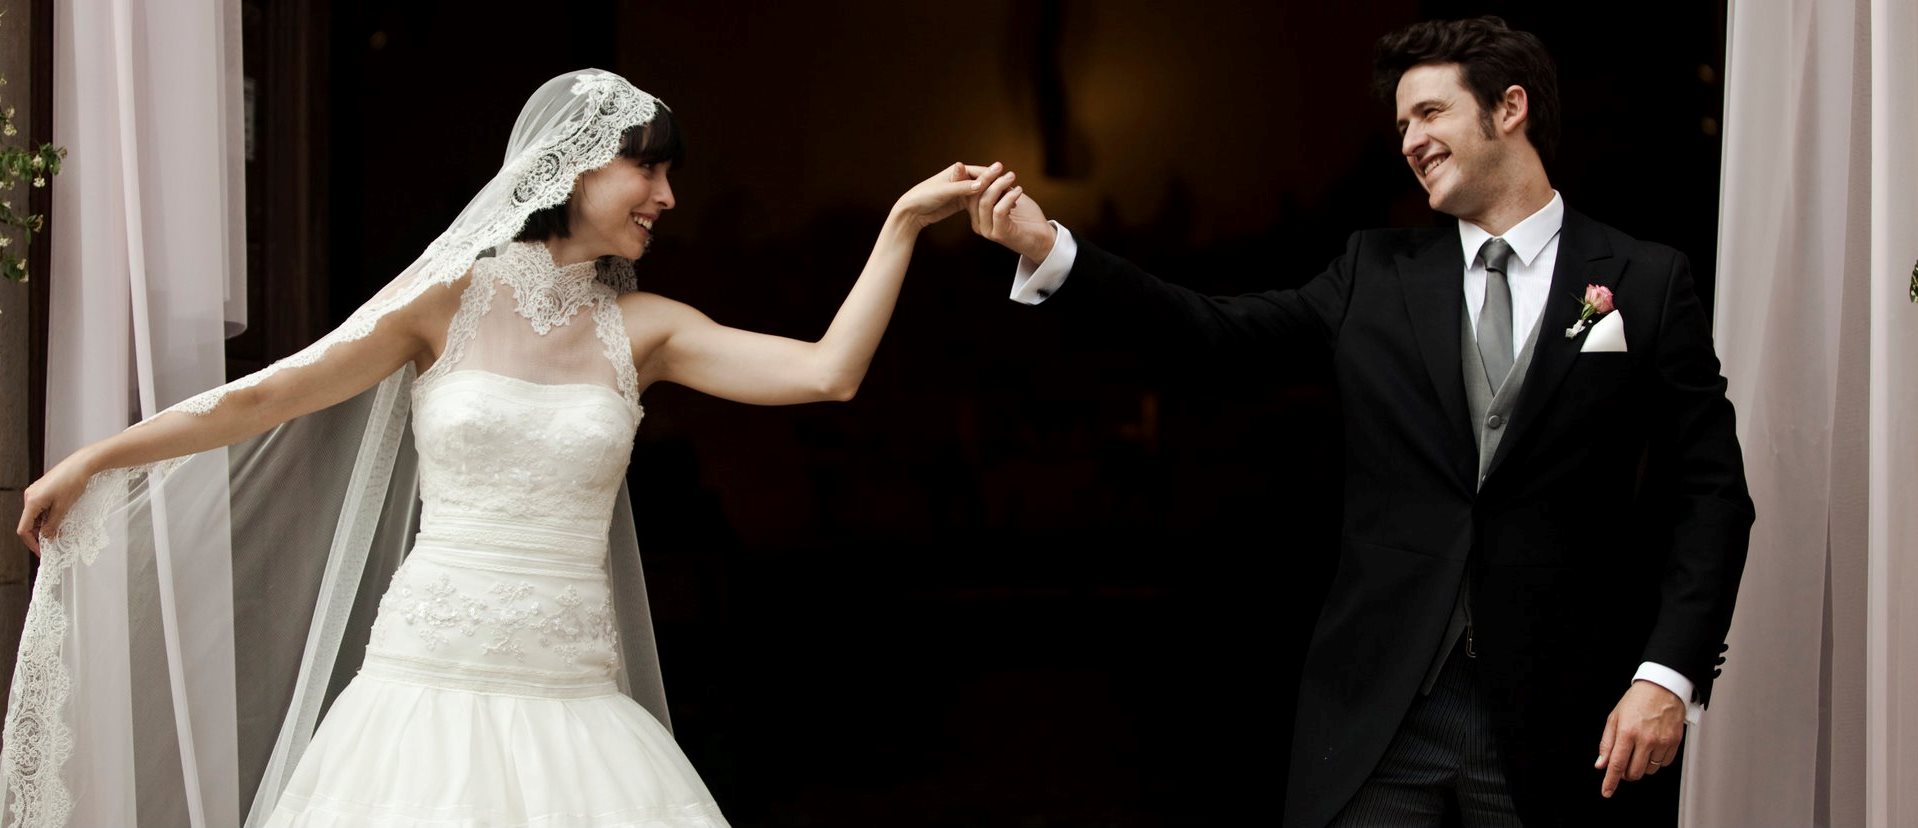 The wedding of Leticia Dolera and Diego Martin in [Rec]3 Genesis (2012)